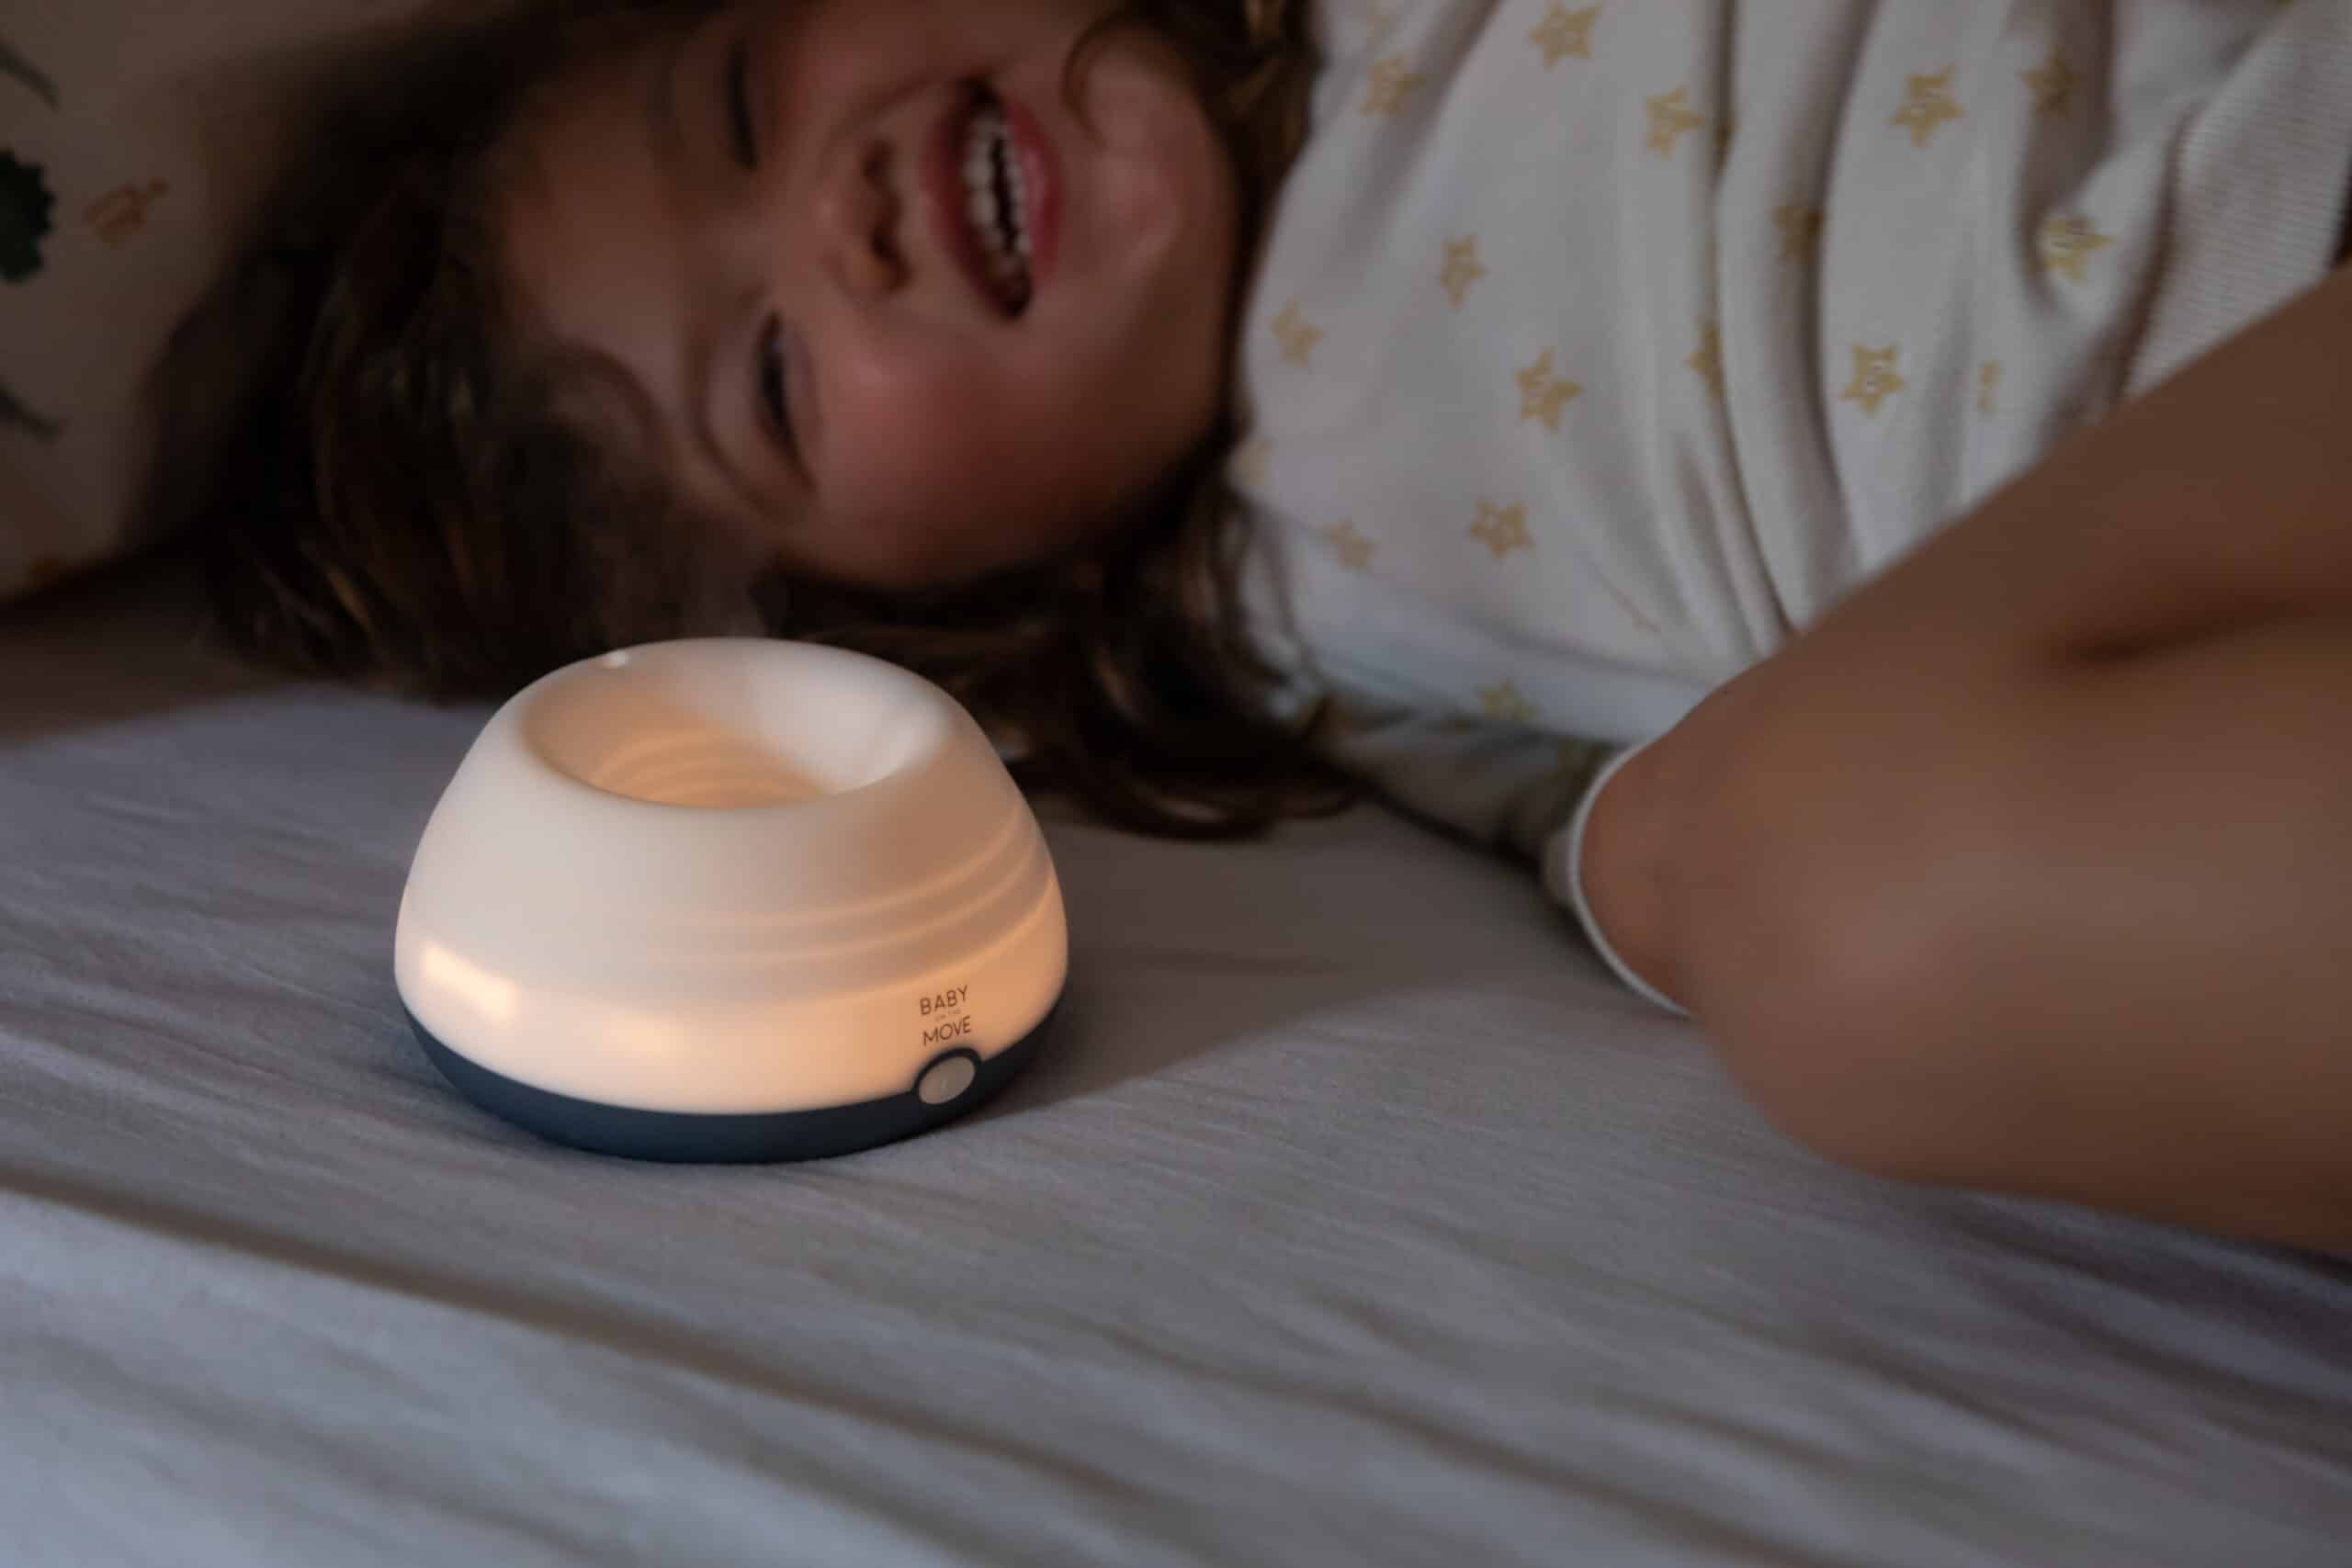 Should I use a nightlight in my child’s room/ nursery?